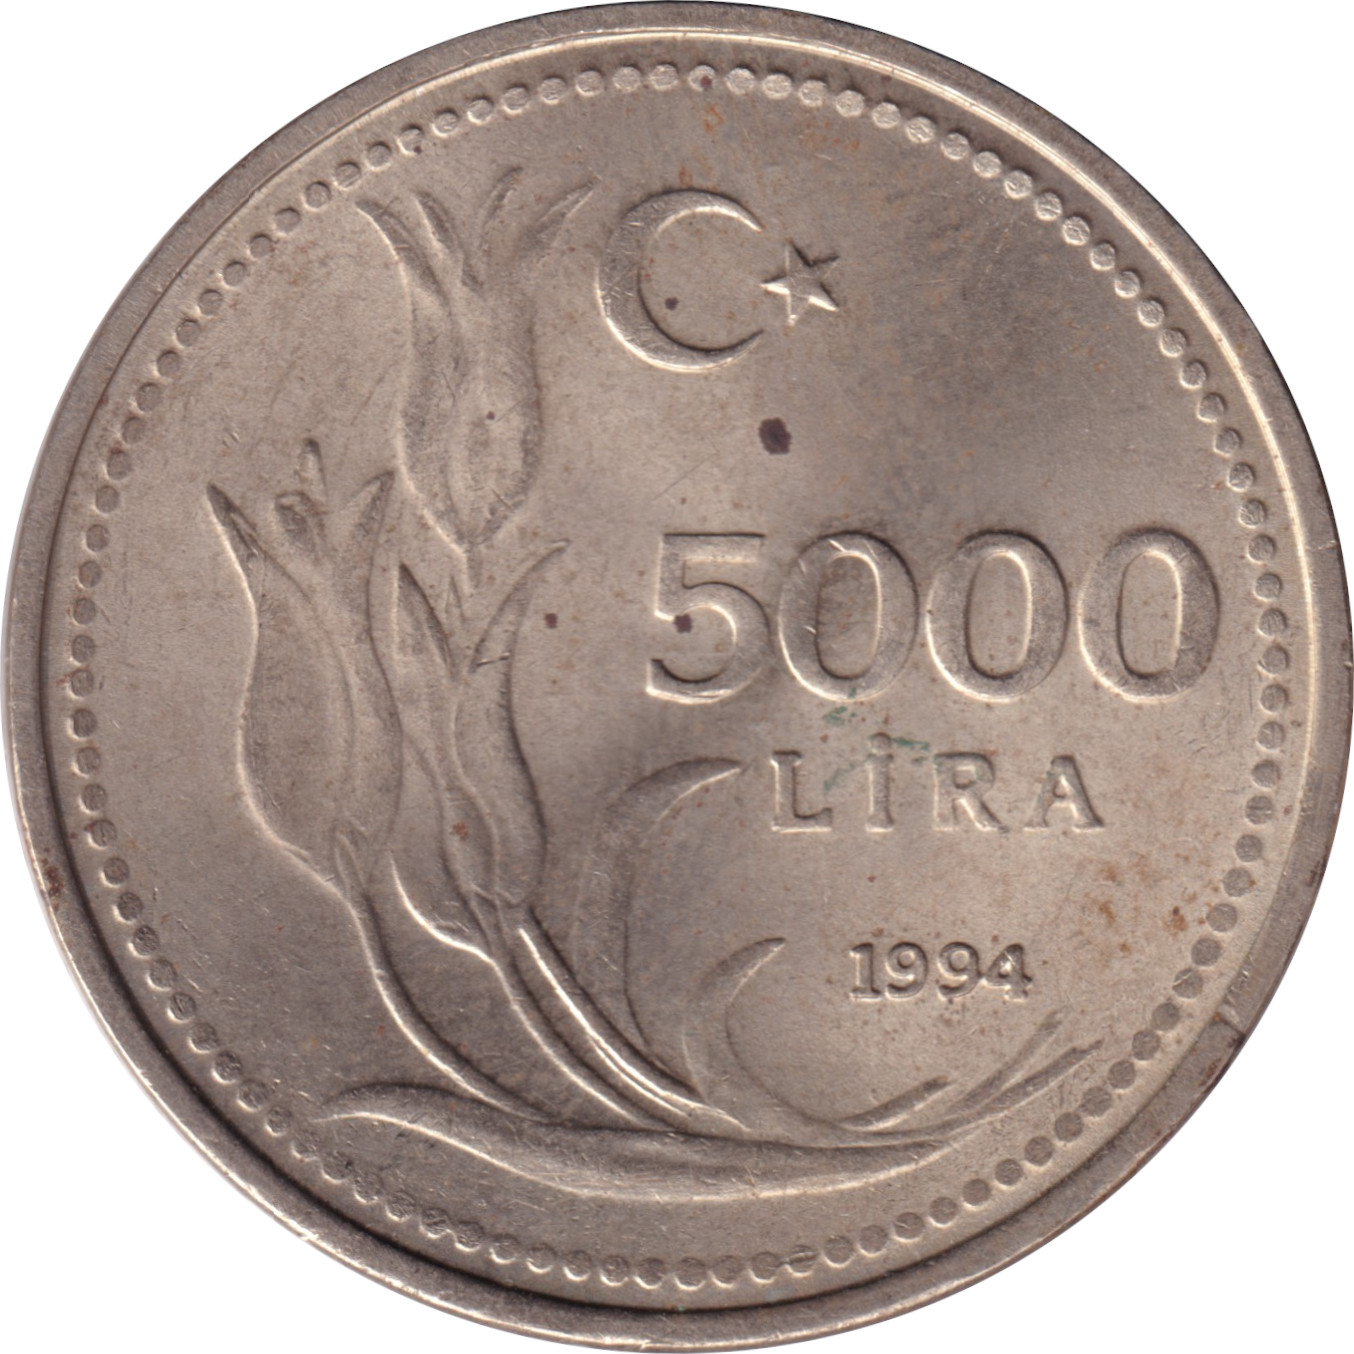 5000 lira - Moustafa Kemal